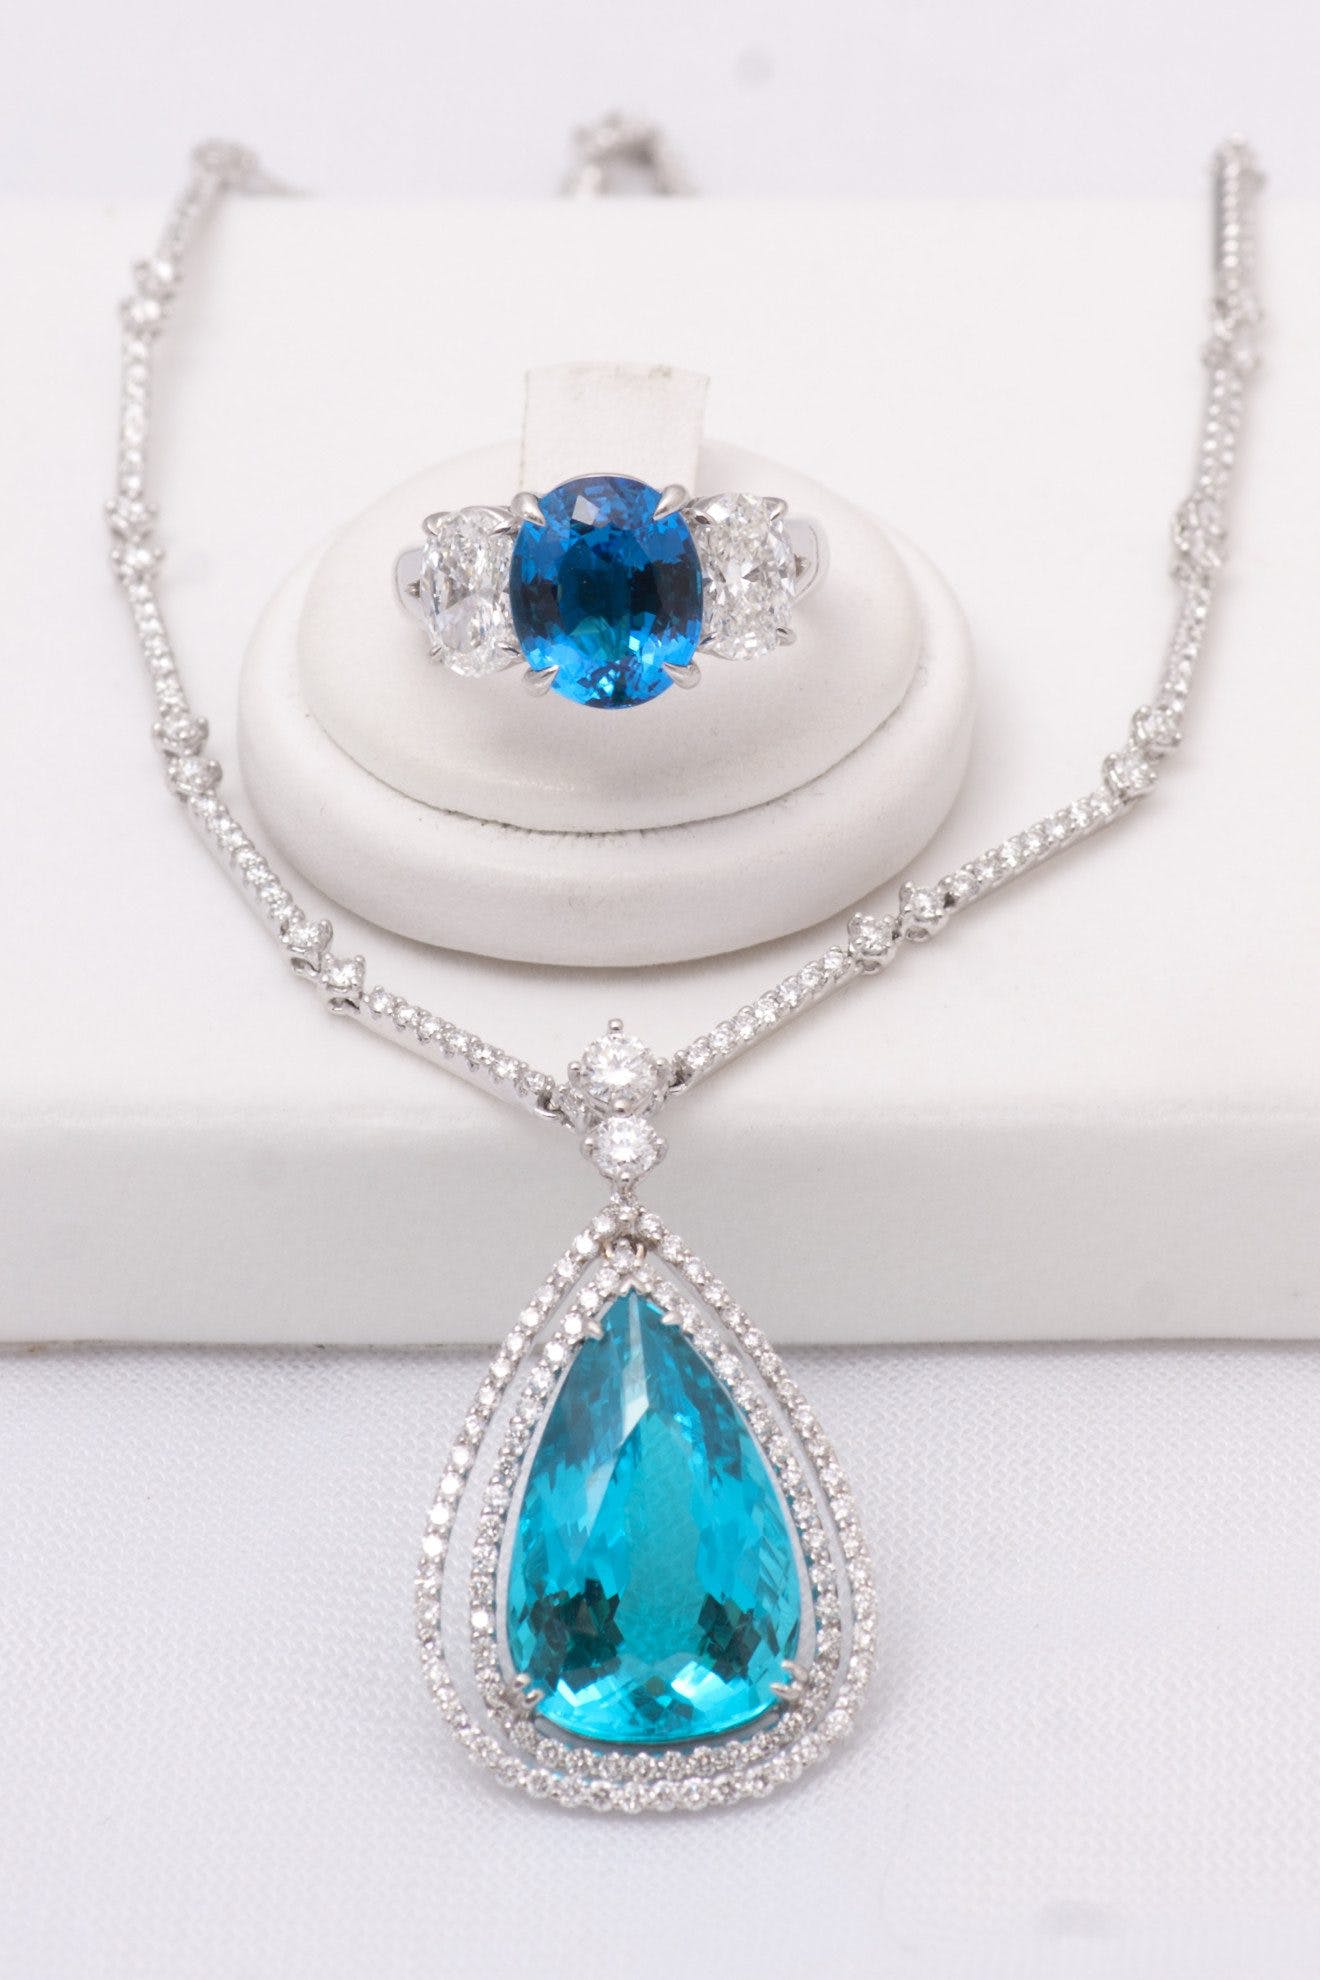 blue gemstones - paraiba ring and necklace